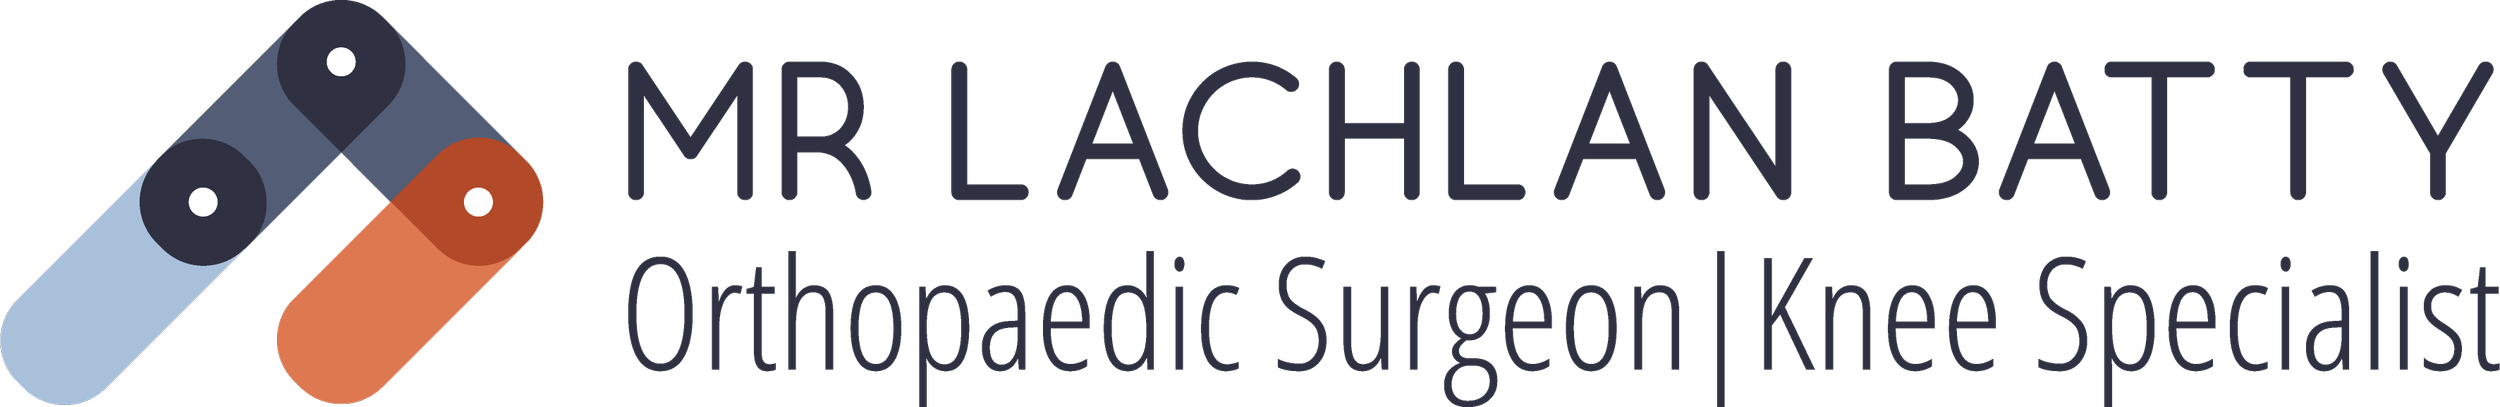 Orthopaedic Knee Surgeon Melbourne | Mr Lachlan Batty